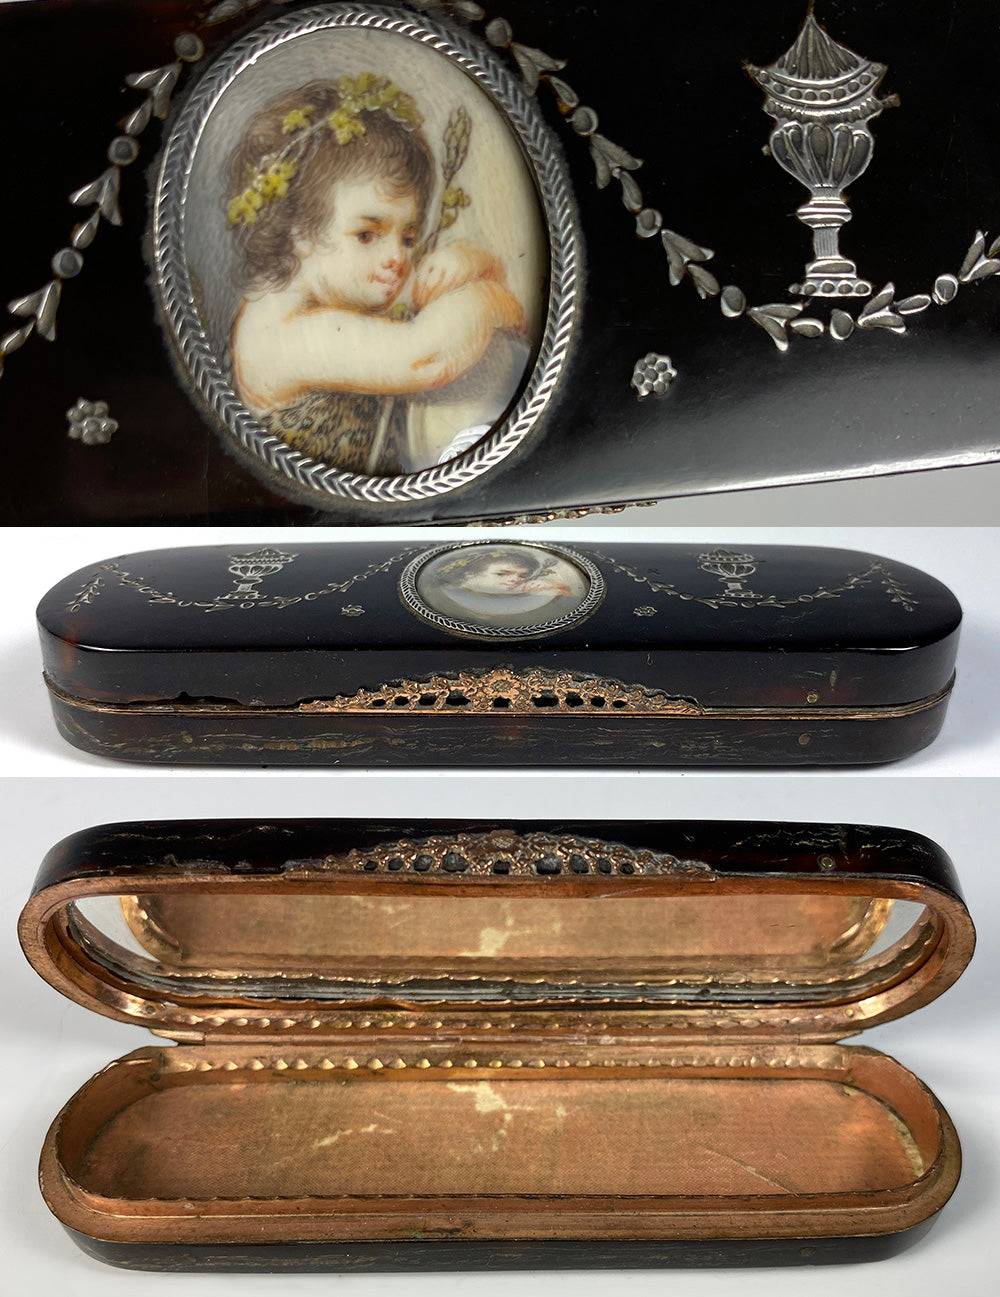 RARE c.1790-1810 French Pique Toothpick Etui, Tortoise Shell Patch Box, Portrait Miniature of a Faun